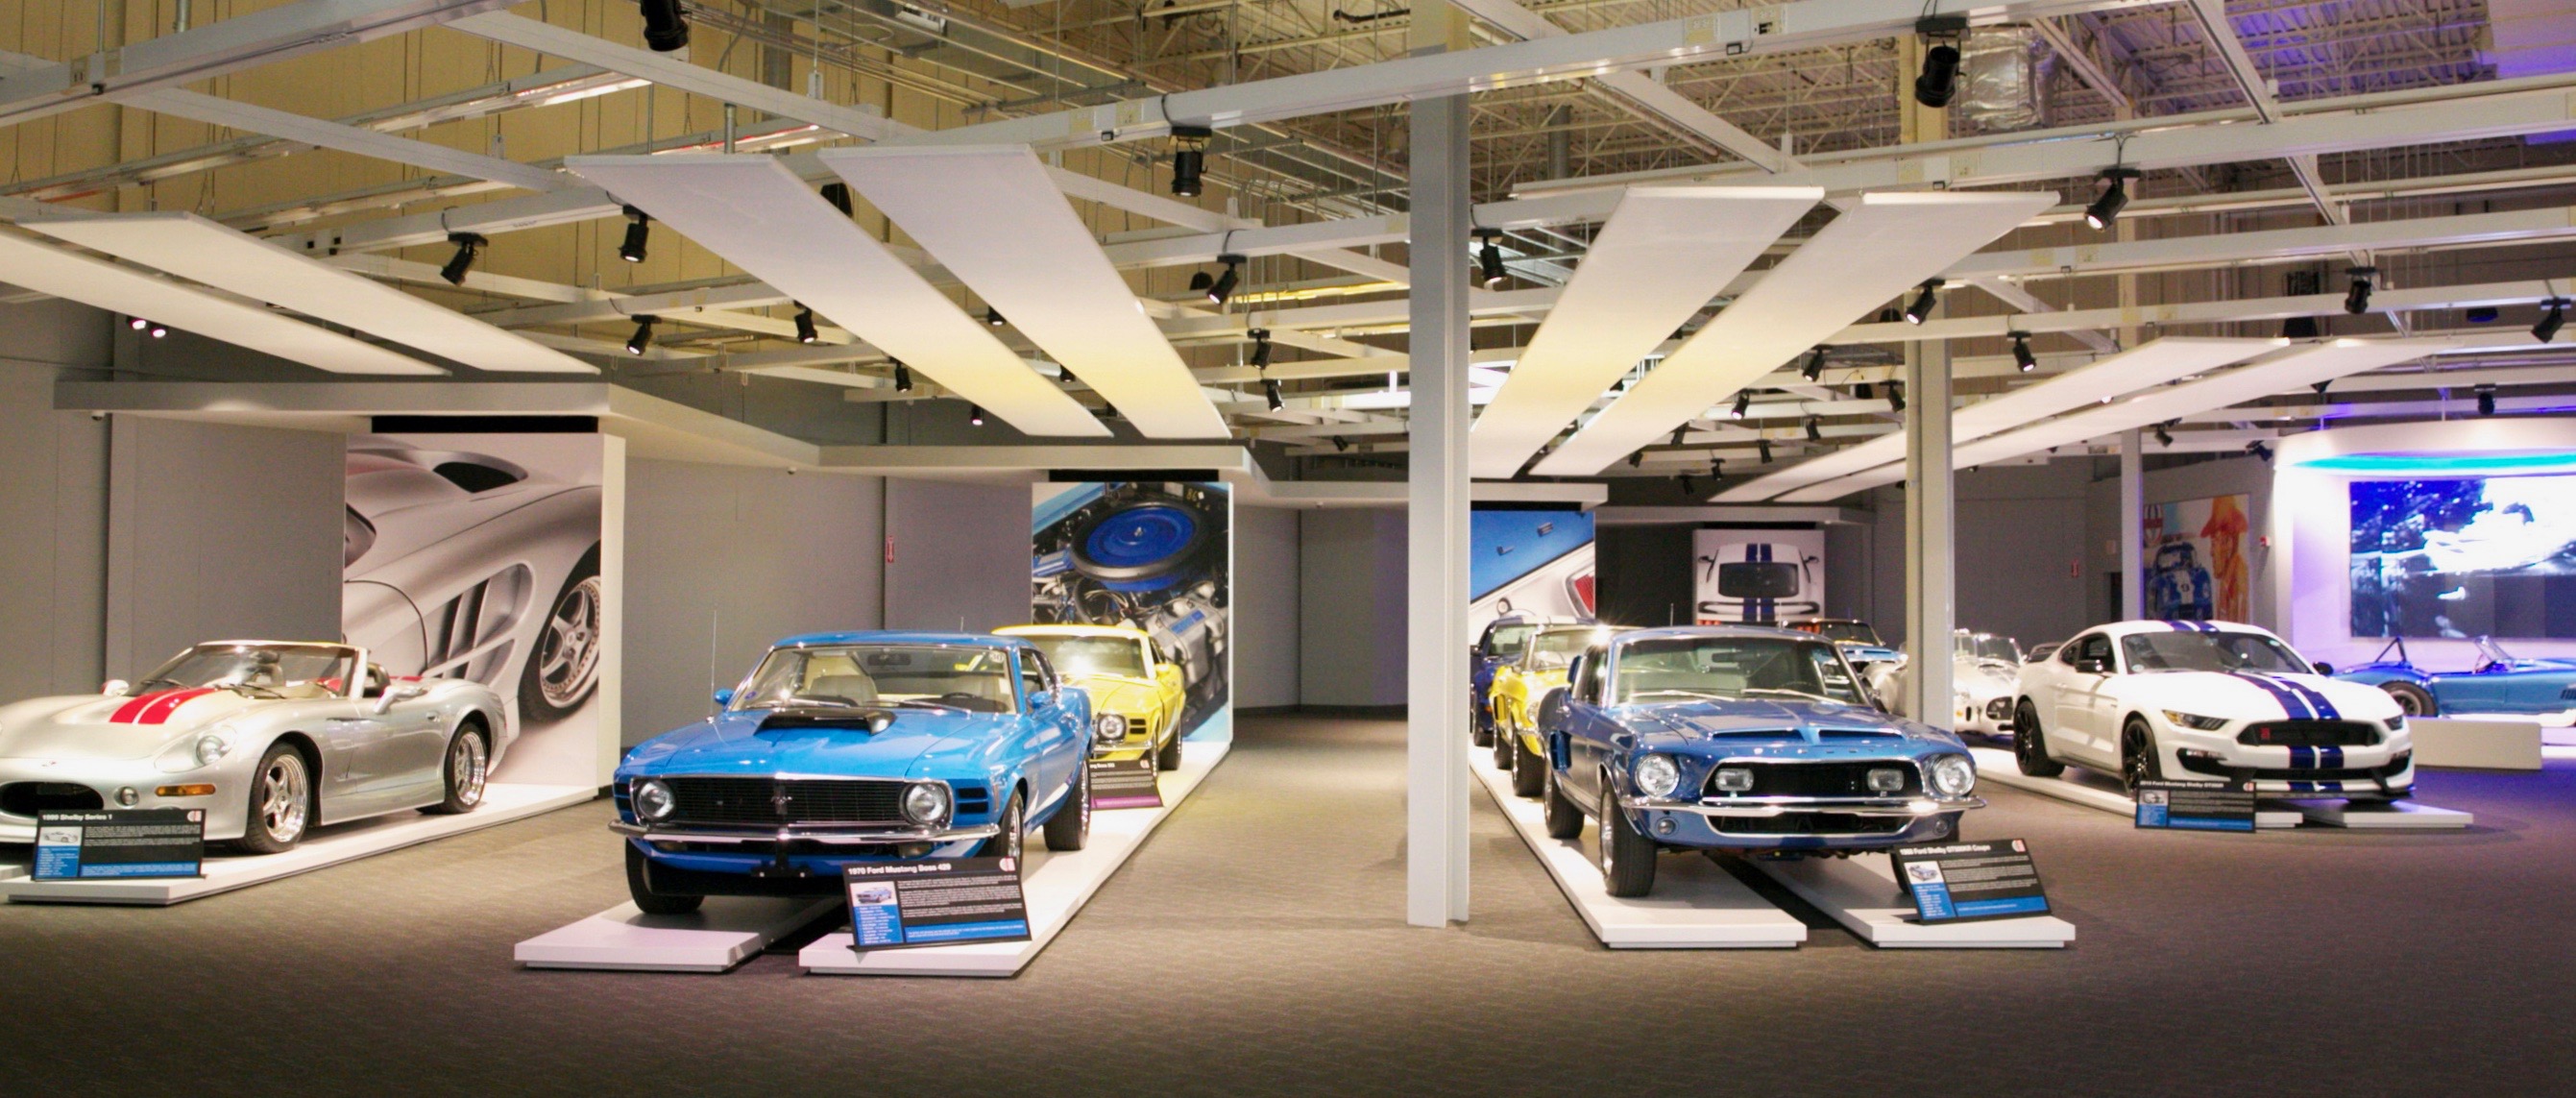 Newport Car Museum is off to a good start | ClassicCars.com Journal